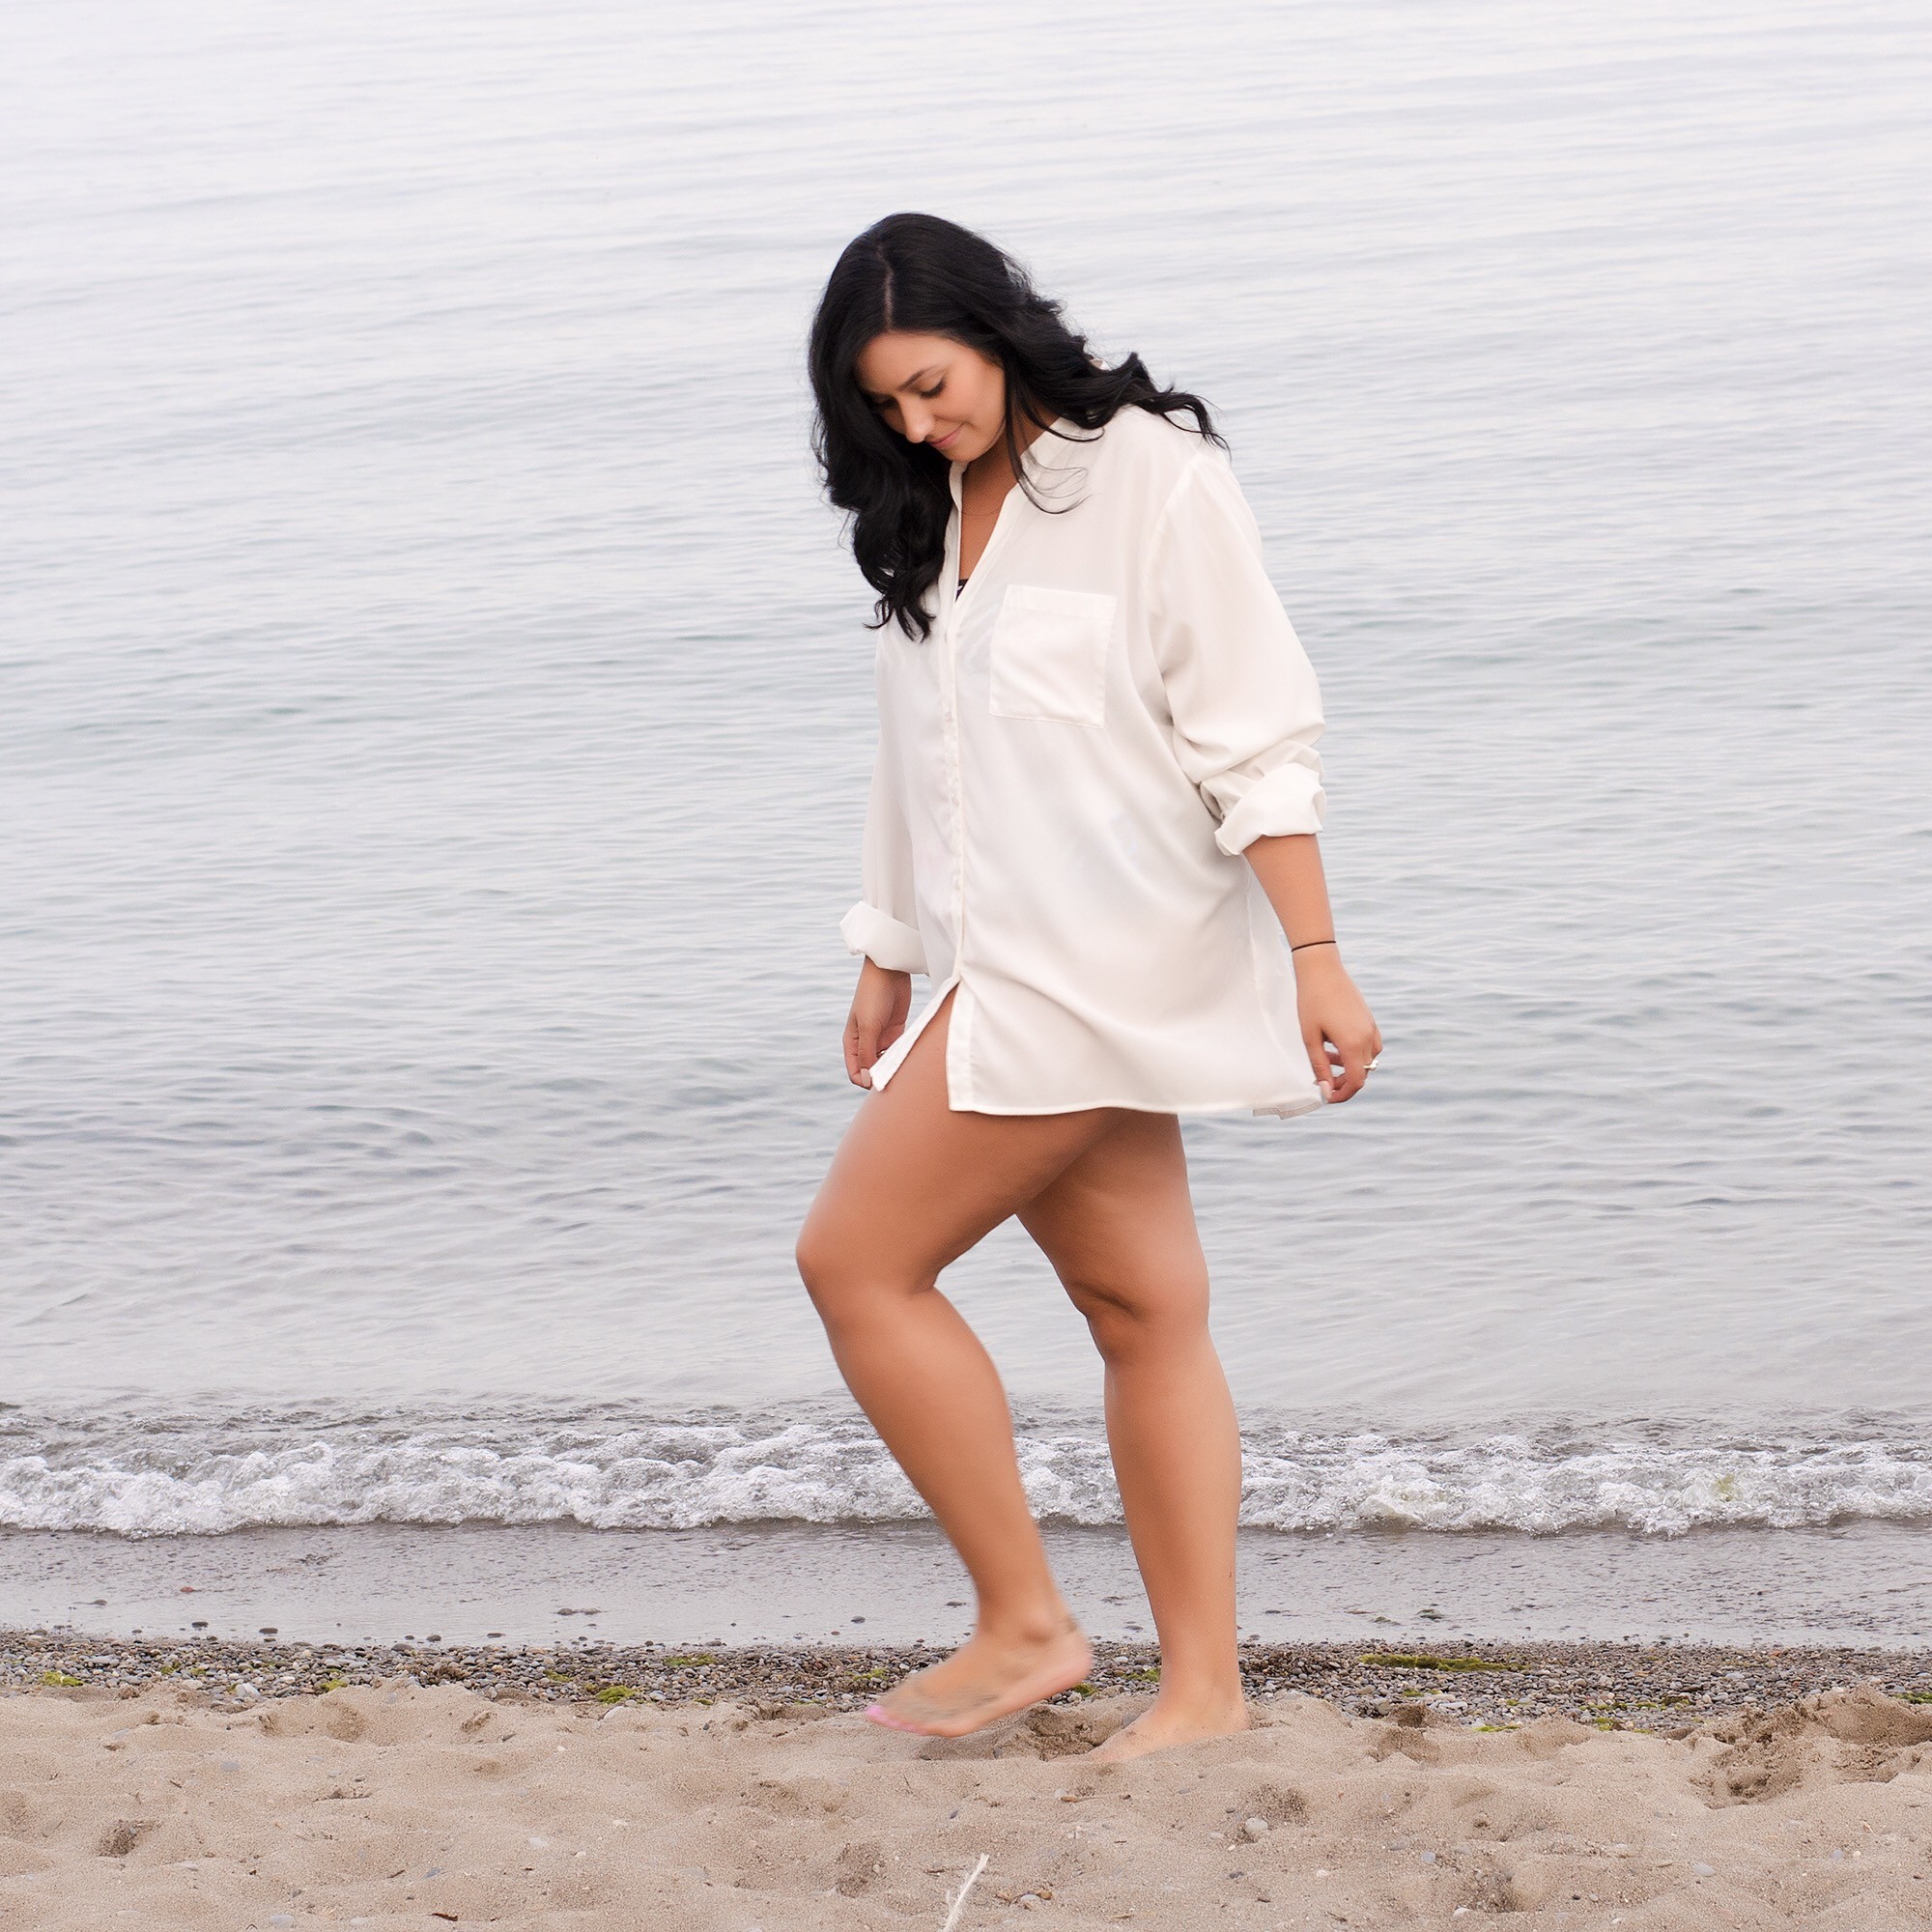 People 2000x2000 women brunette white shirt thick thigh beach seashore outdoors model black hair thighs